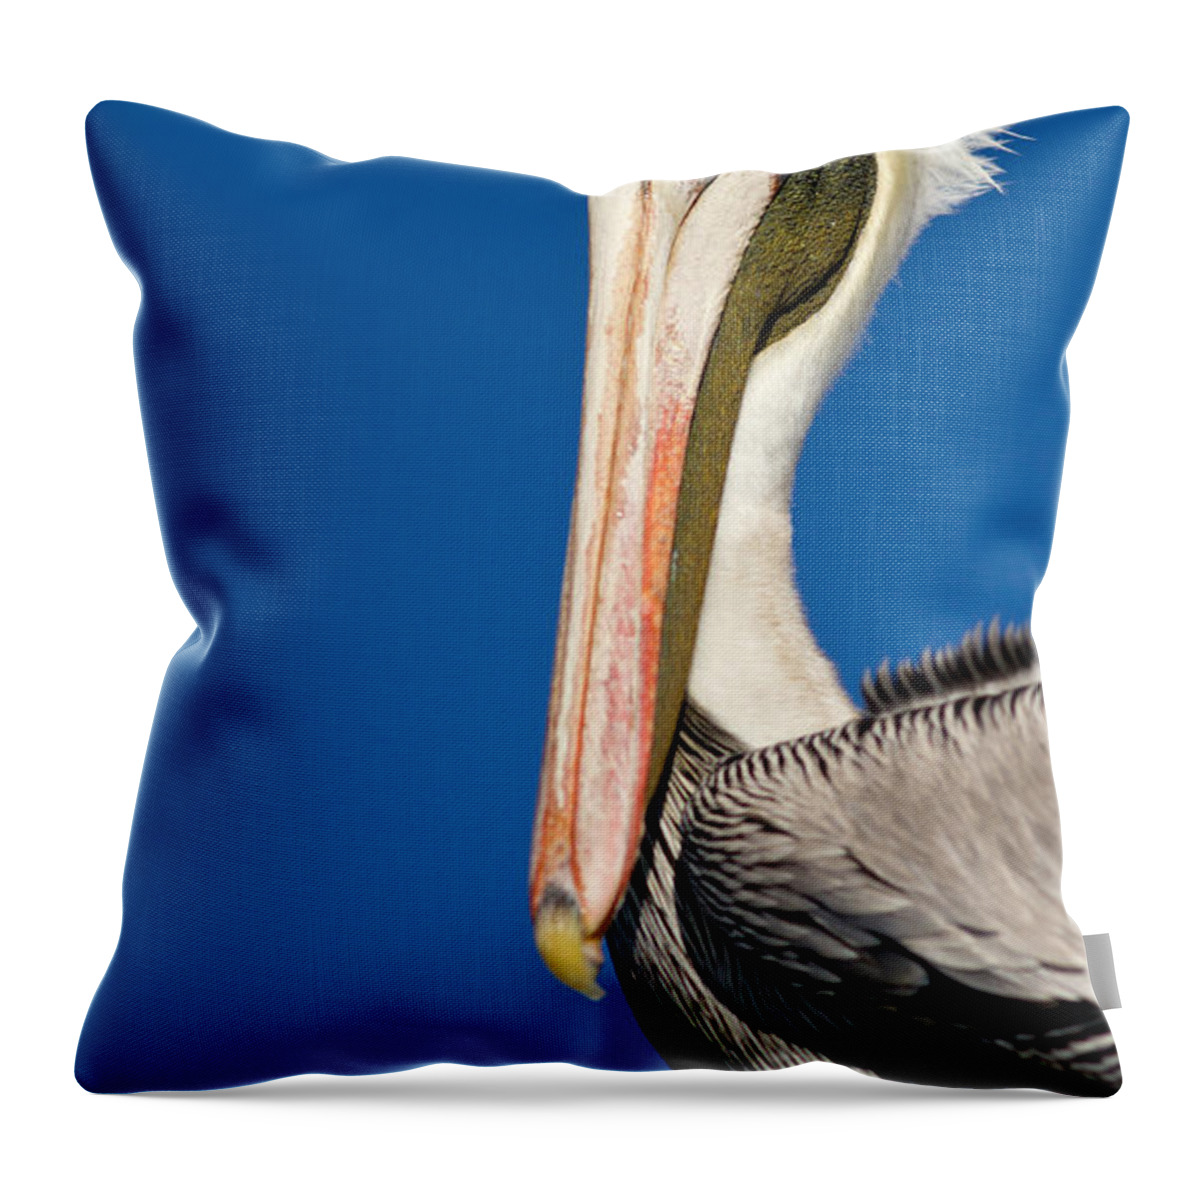 Portrait Throw Pillow featuring the photograph Pelican by Les Palenik